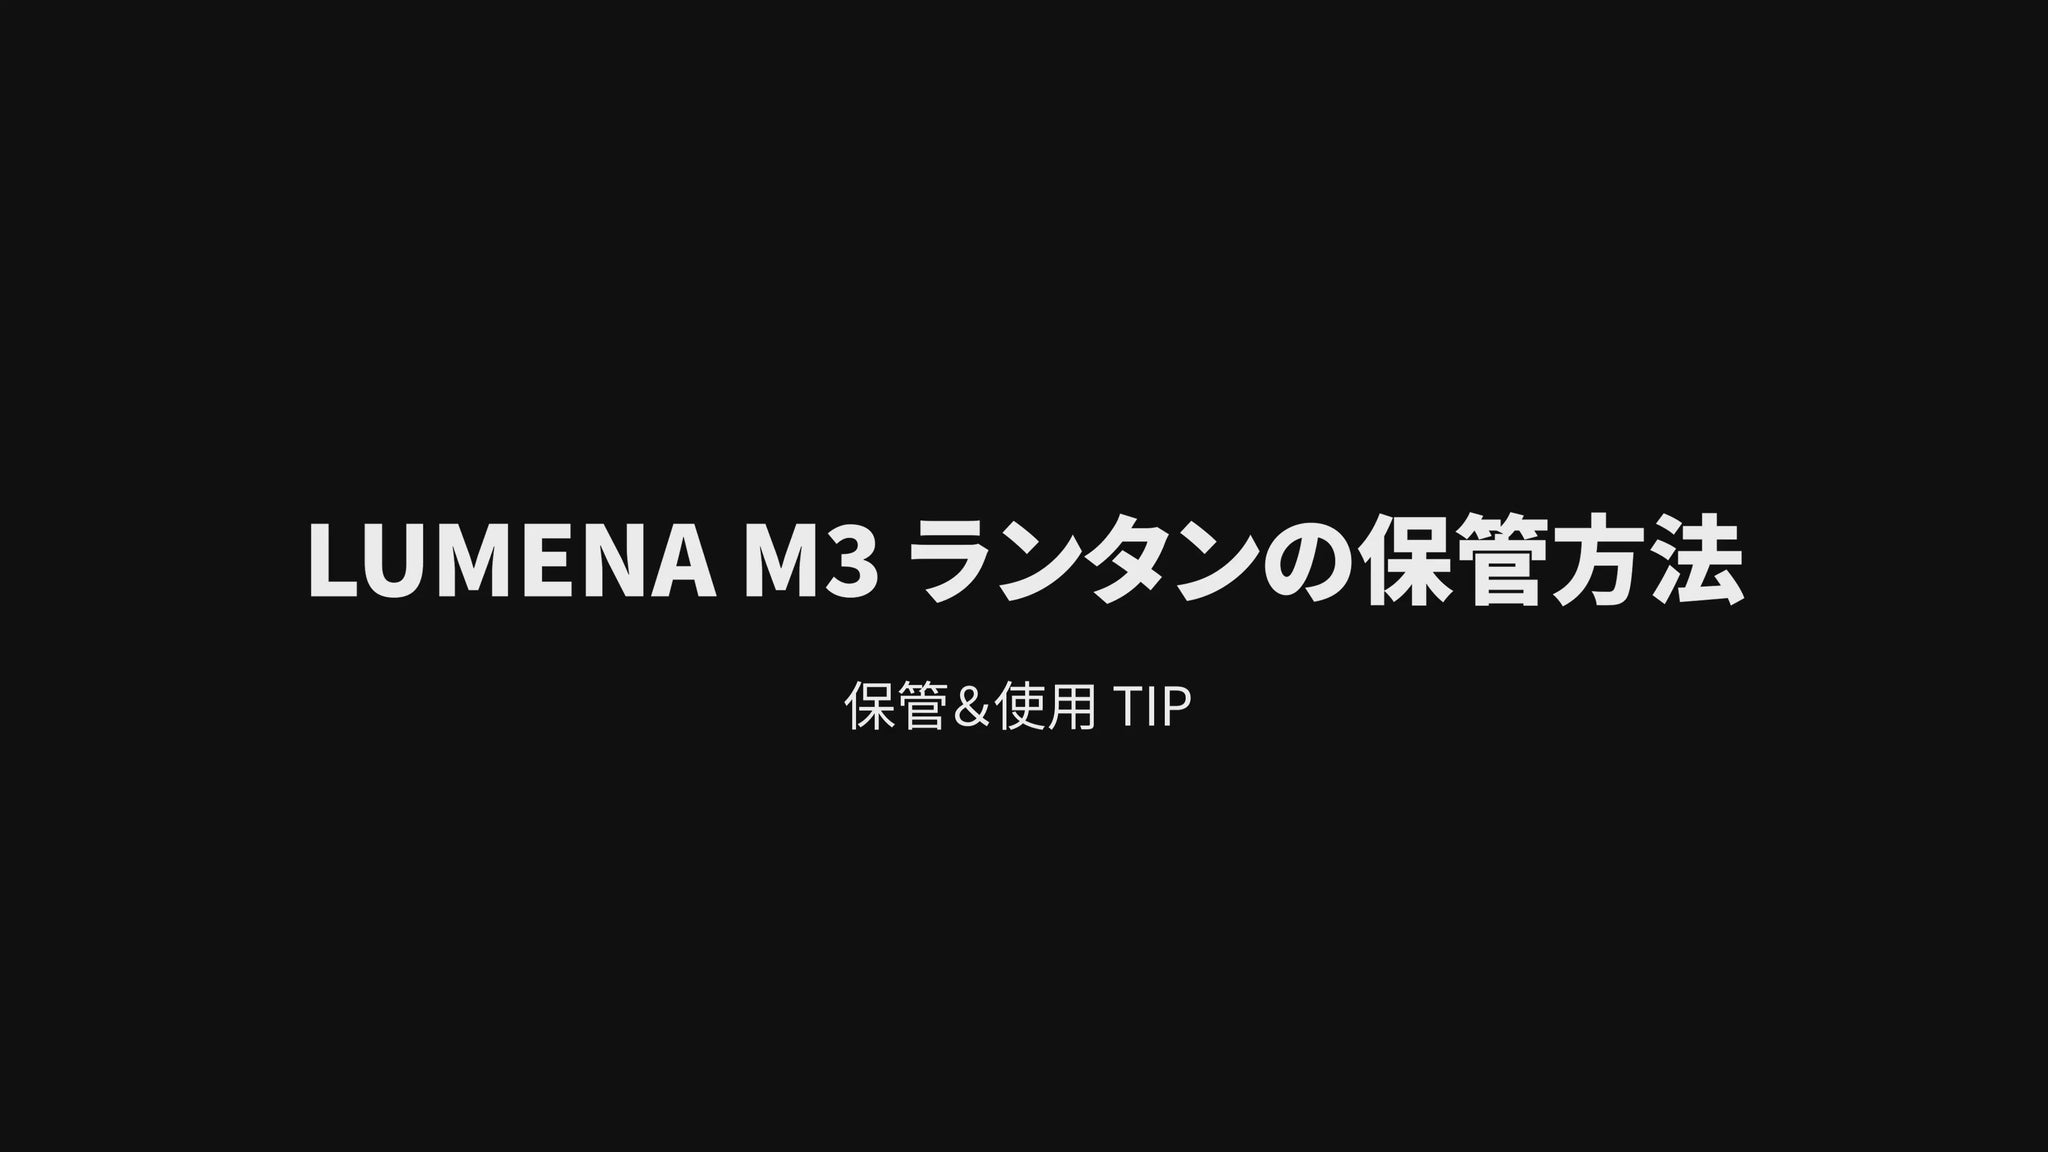 LUMENA M3の商品説明動画02